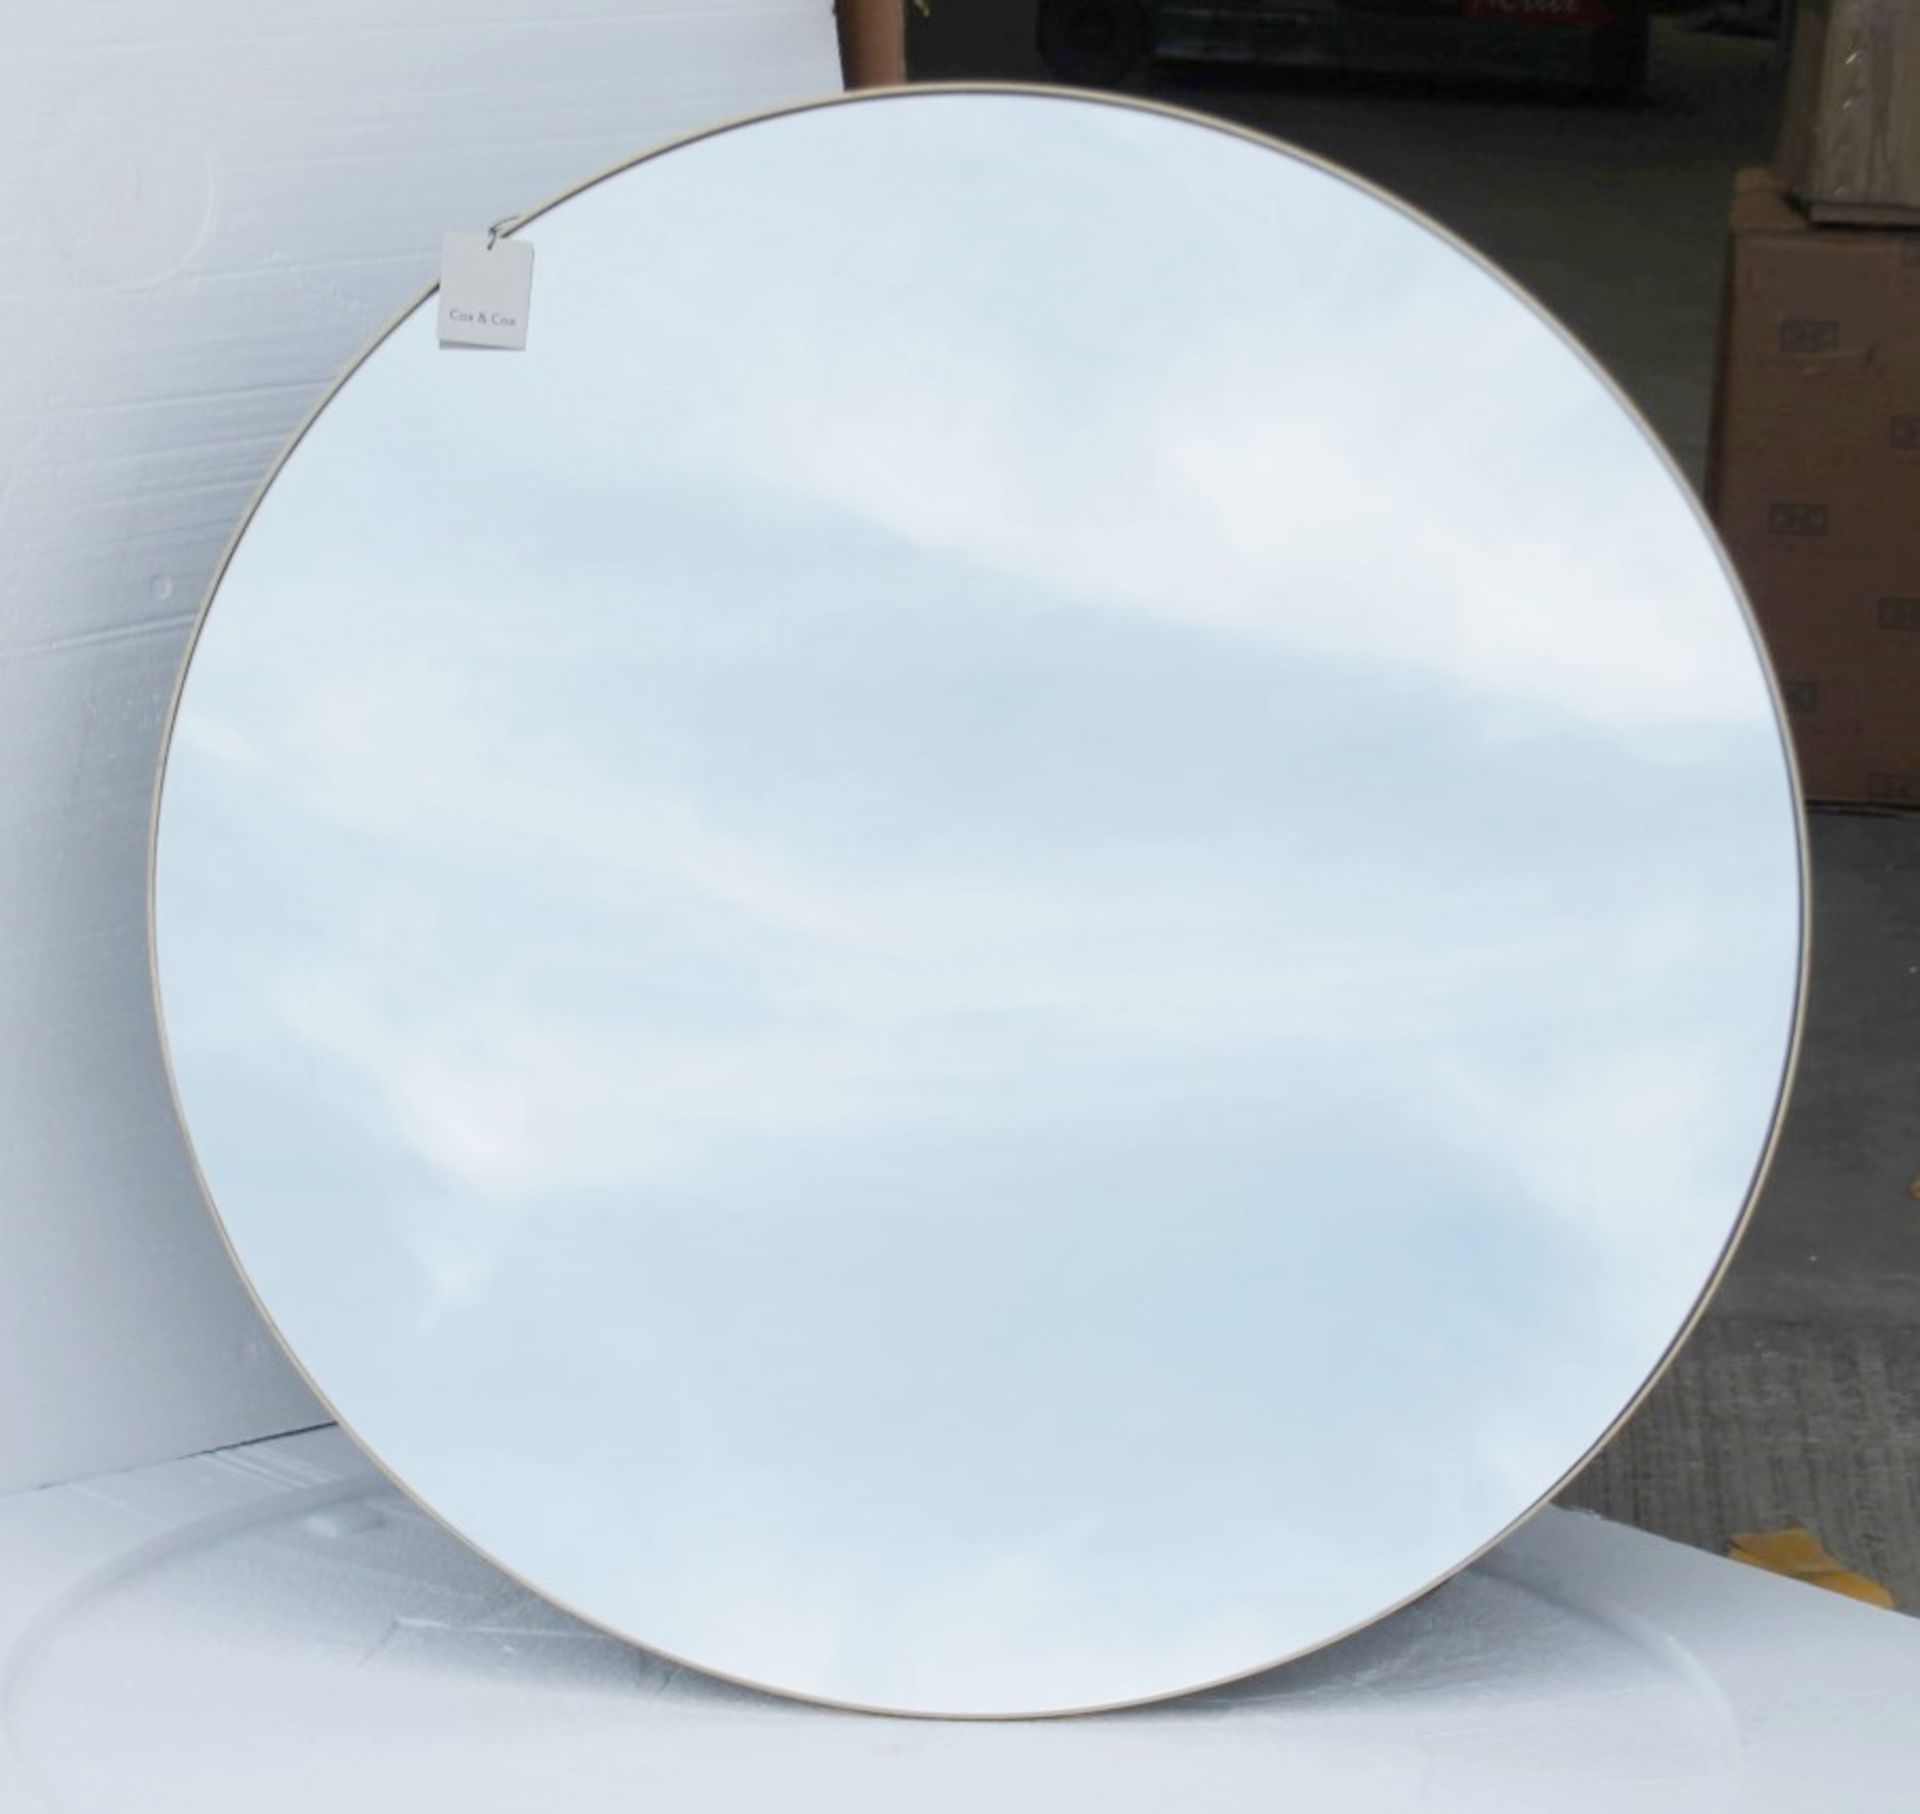 1 x COX & COX Antique Brass Slim Frame Extra Large Round Mirror - Original RRP £395.00 - Image 2 of 6